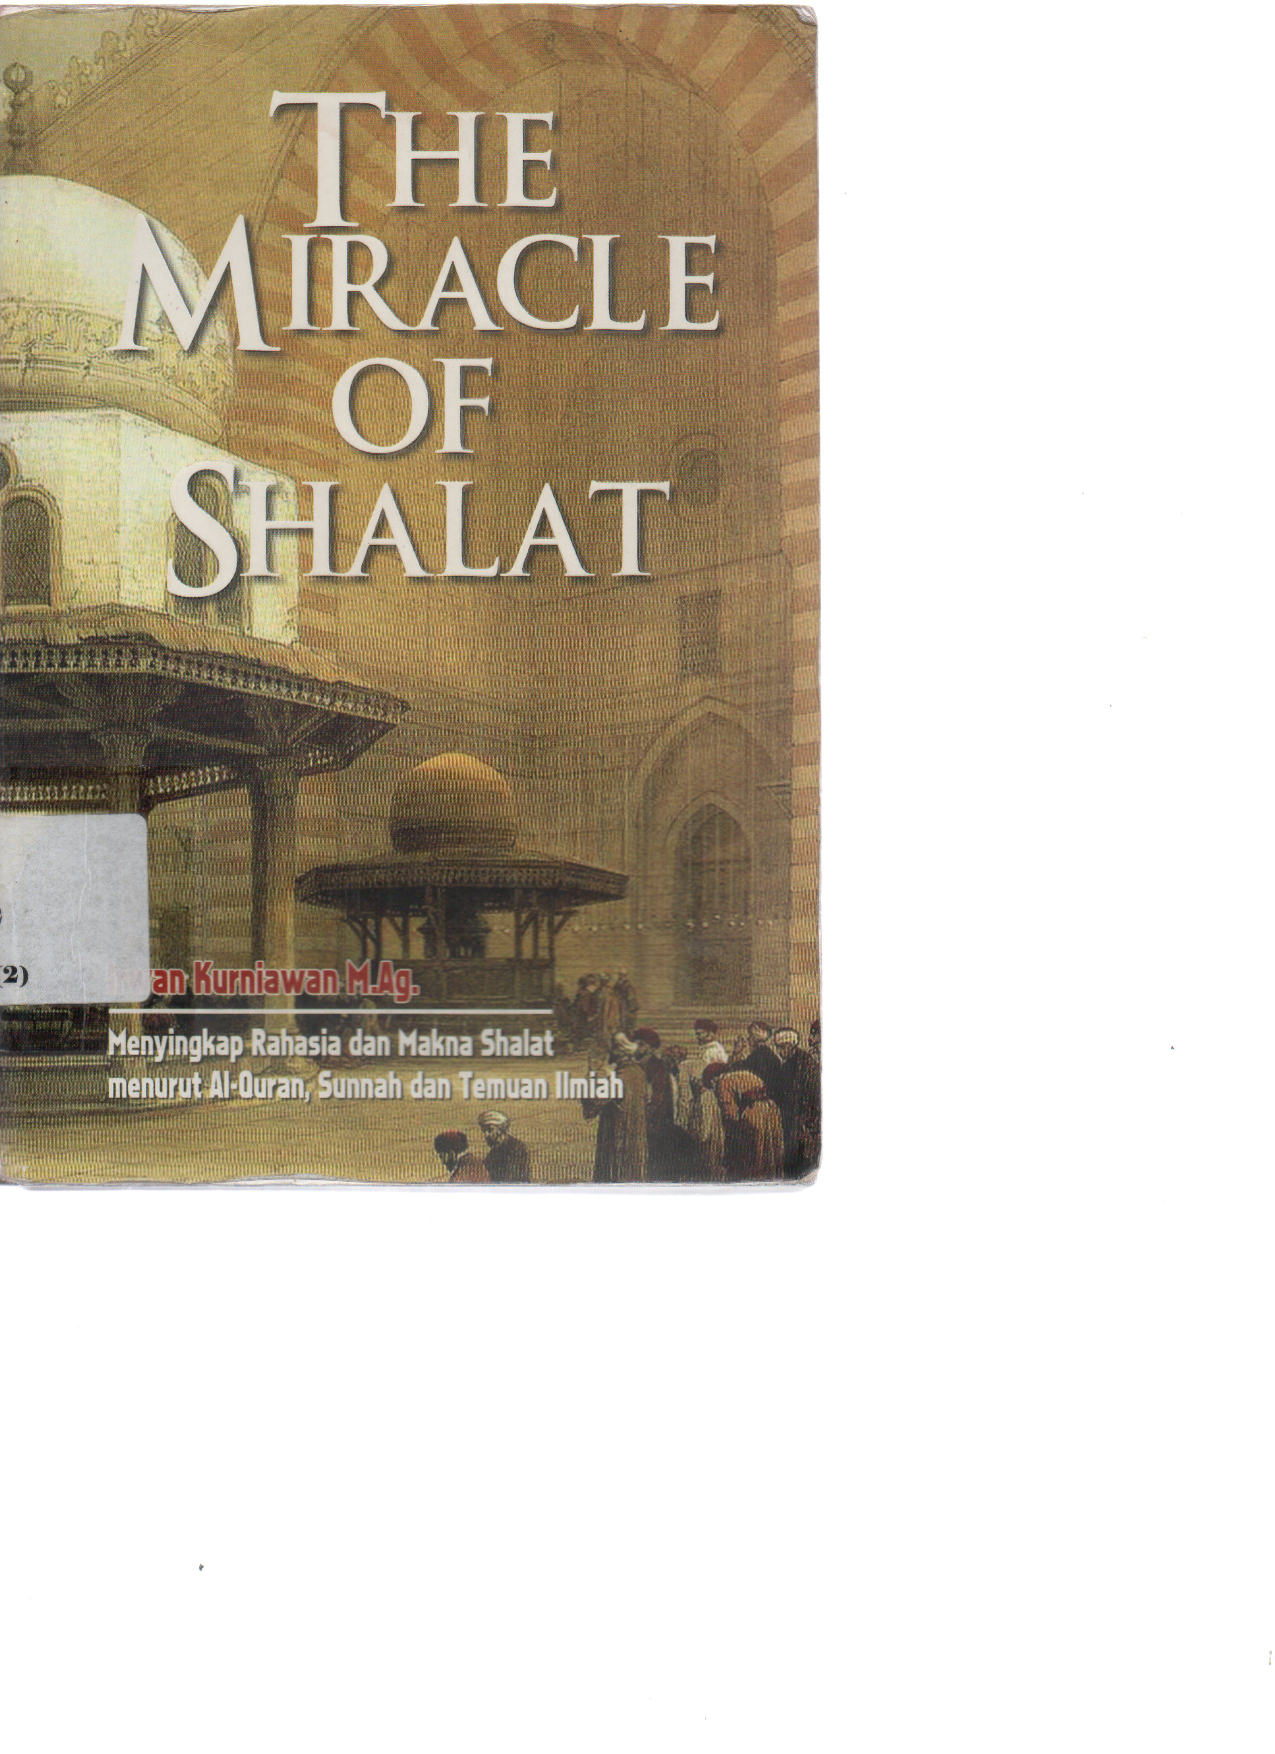 The Miracle of Shalat